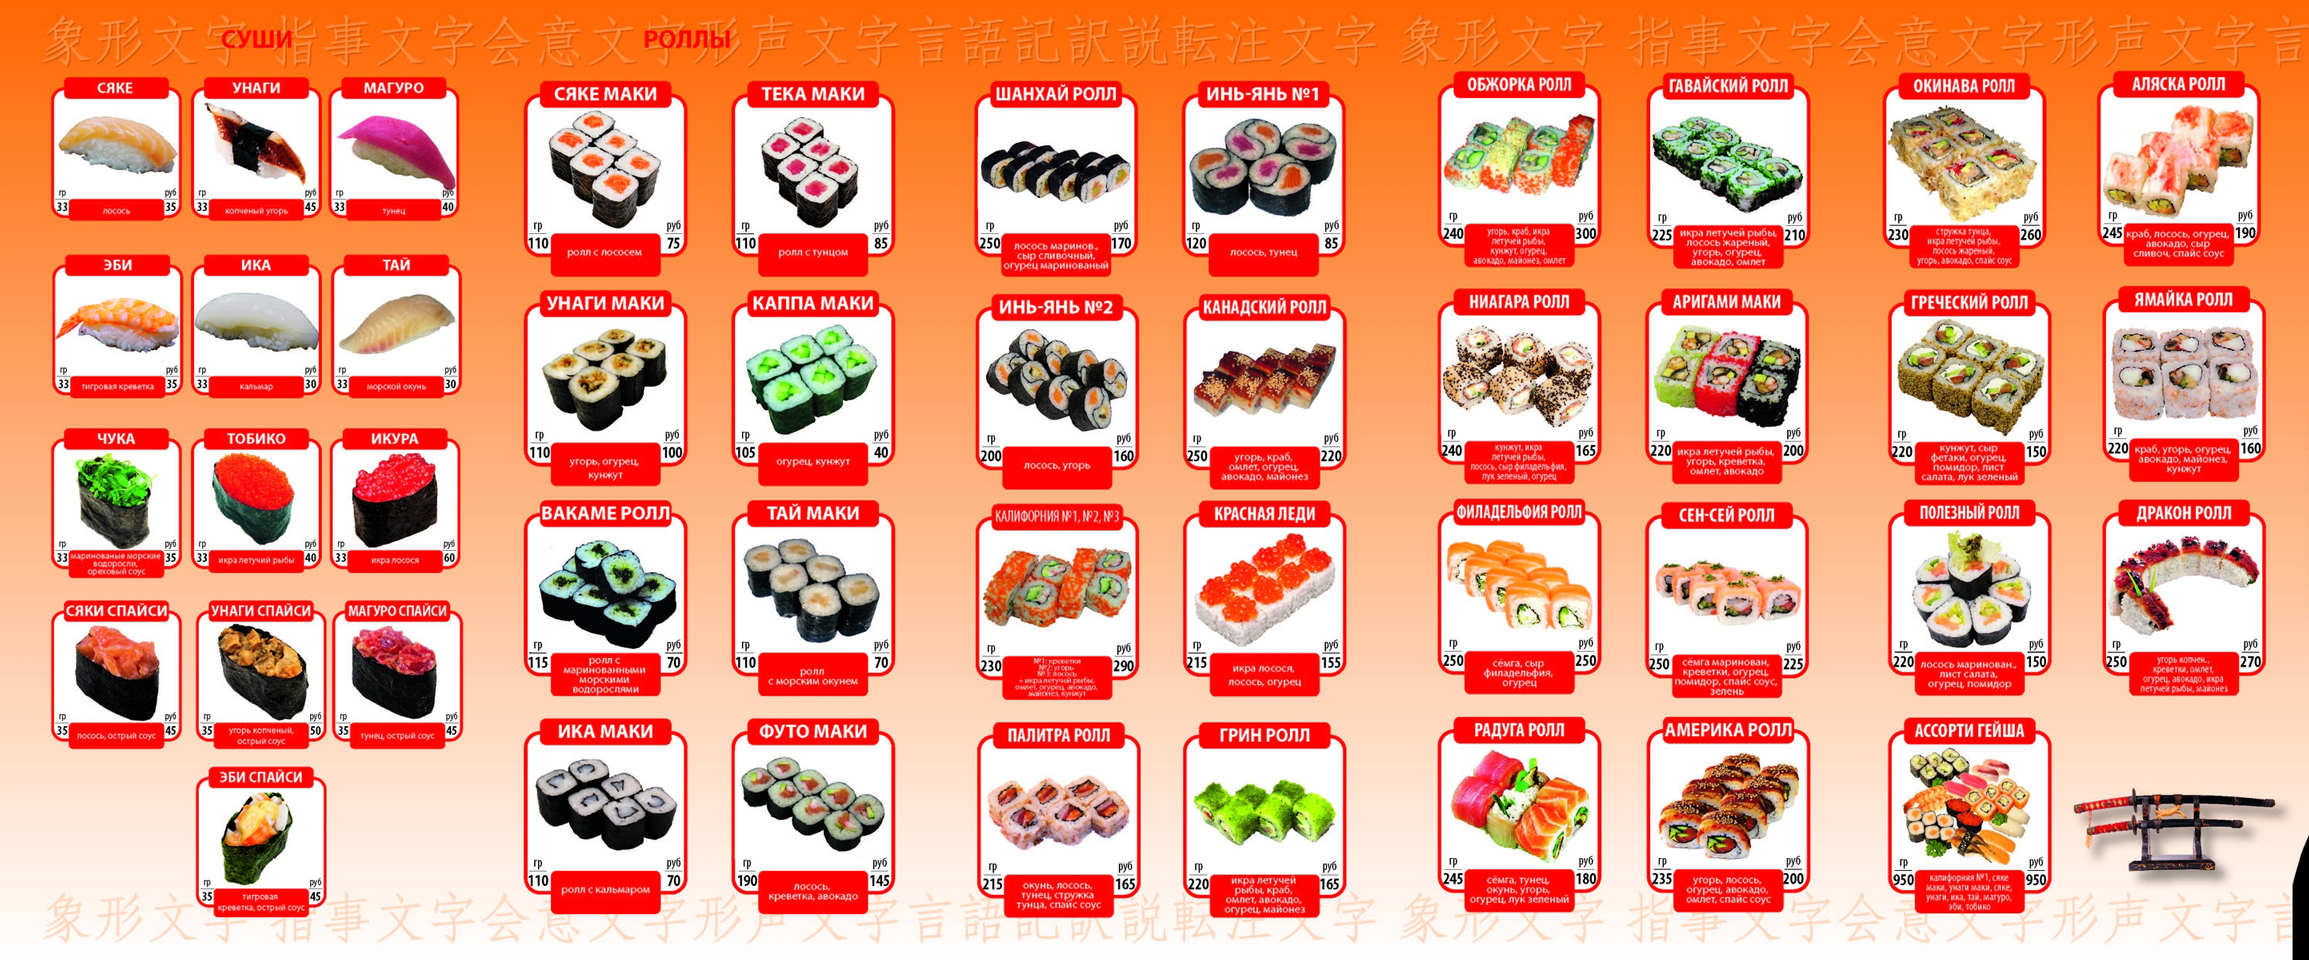 Publix sushi prices